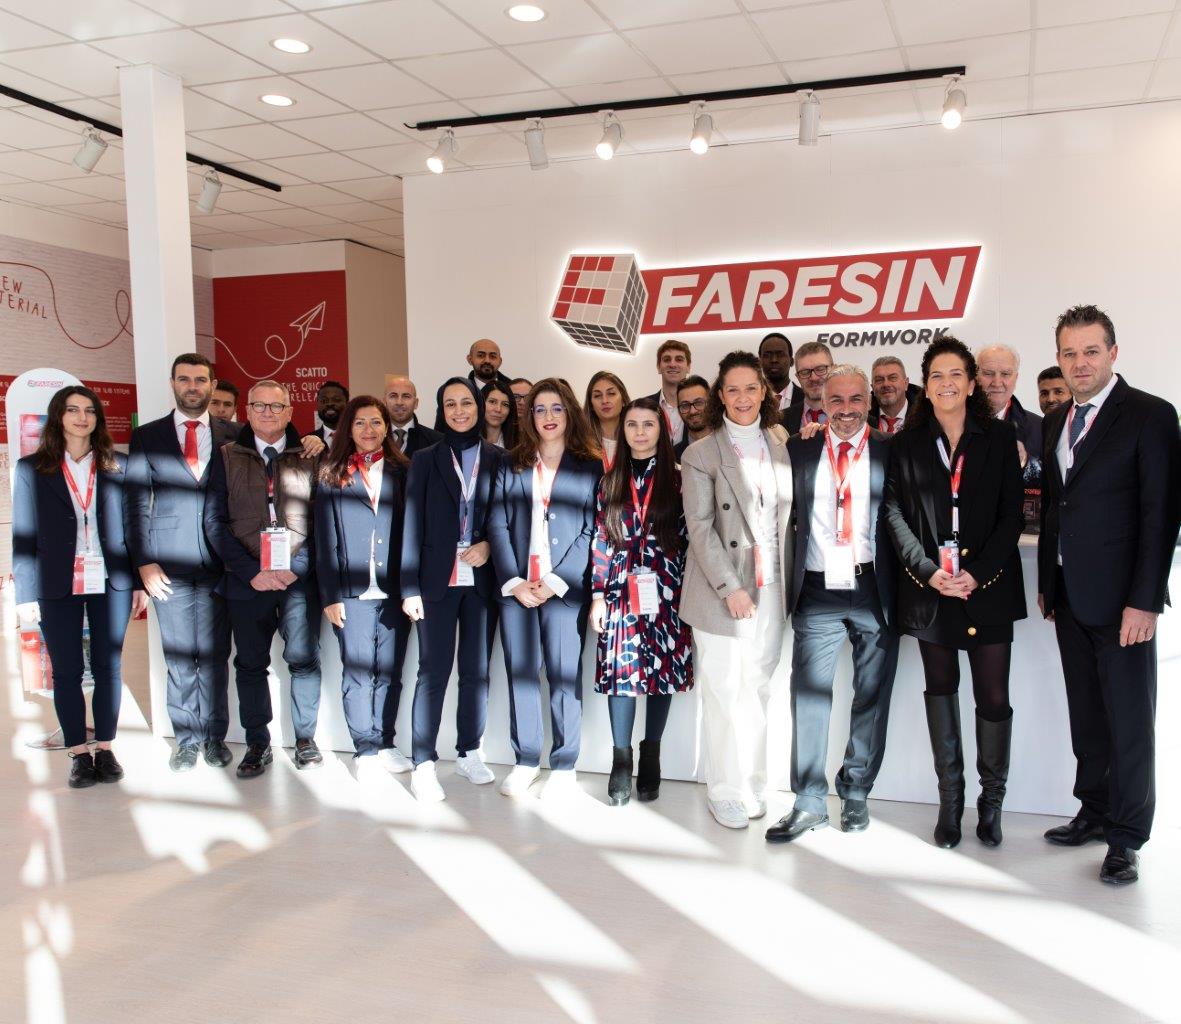 Great success for Faresin Formwork at Bauma 2022